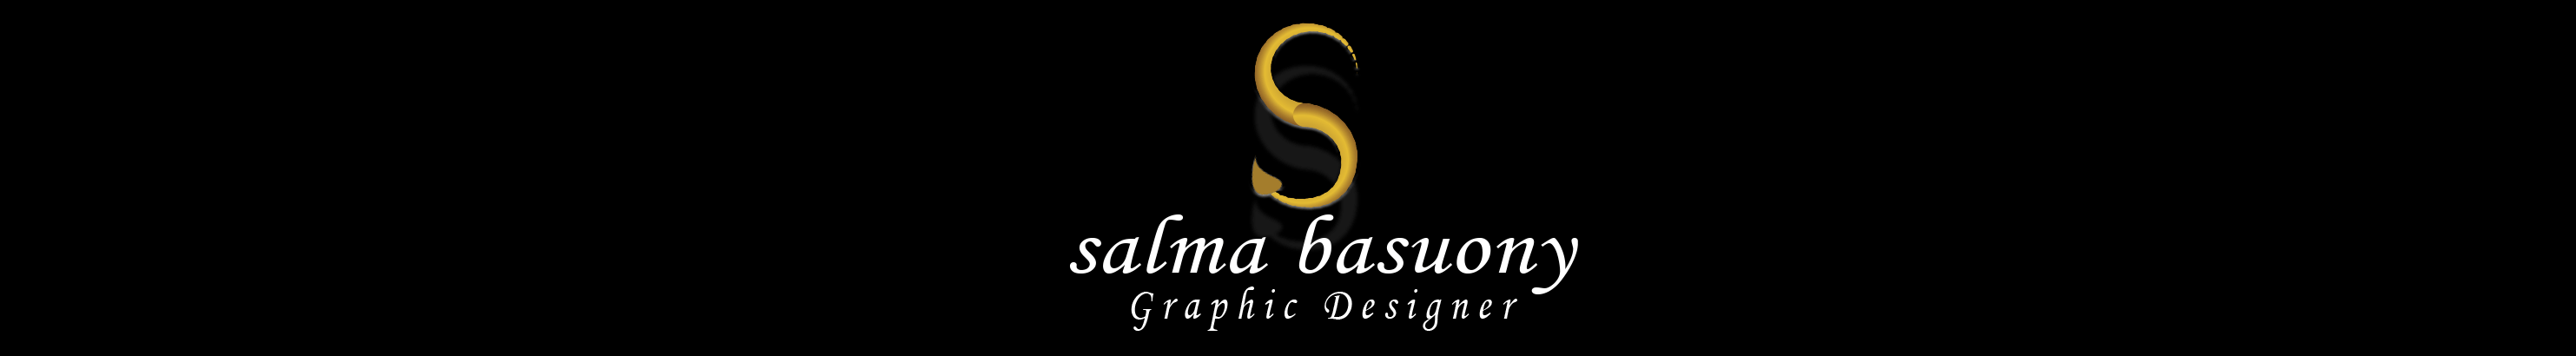 Banner de perfil de Salma Basuony